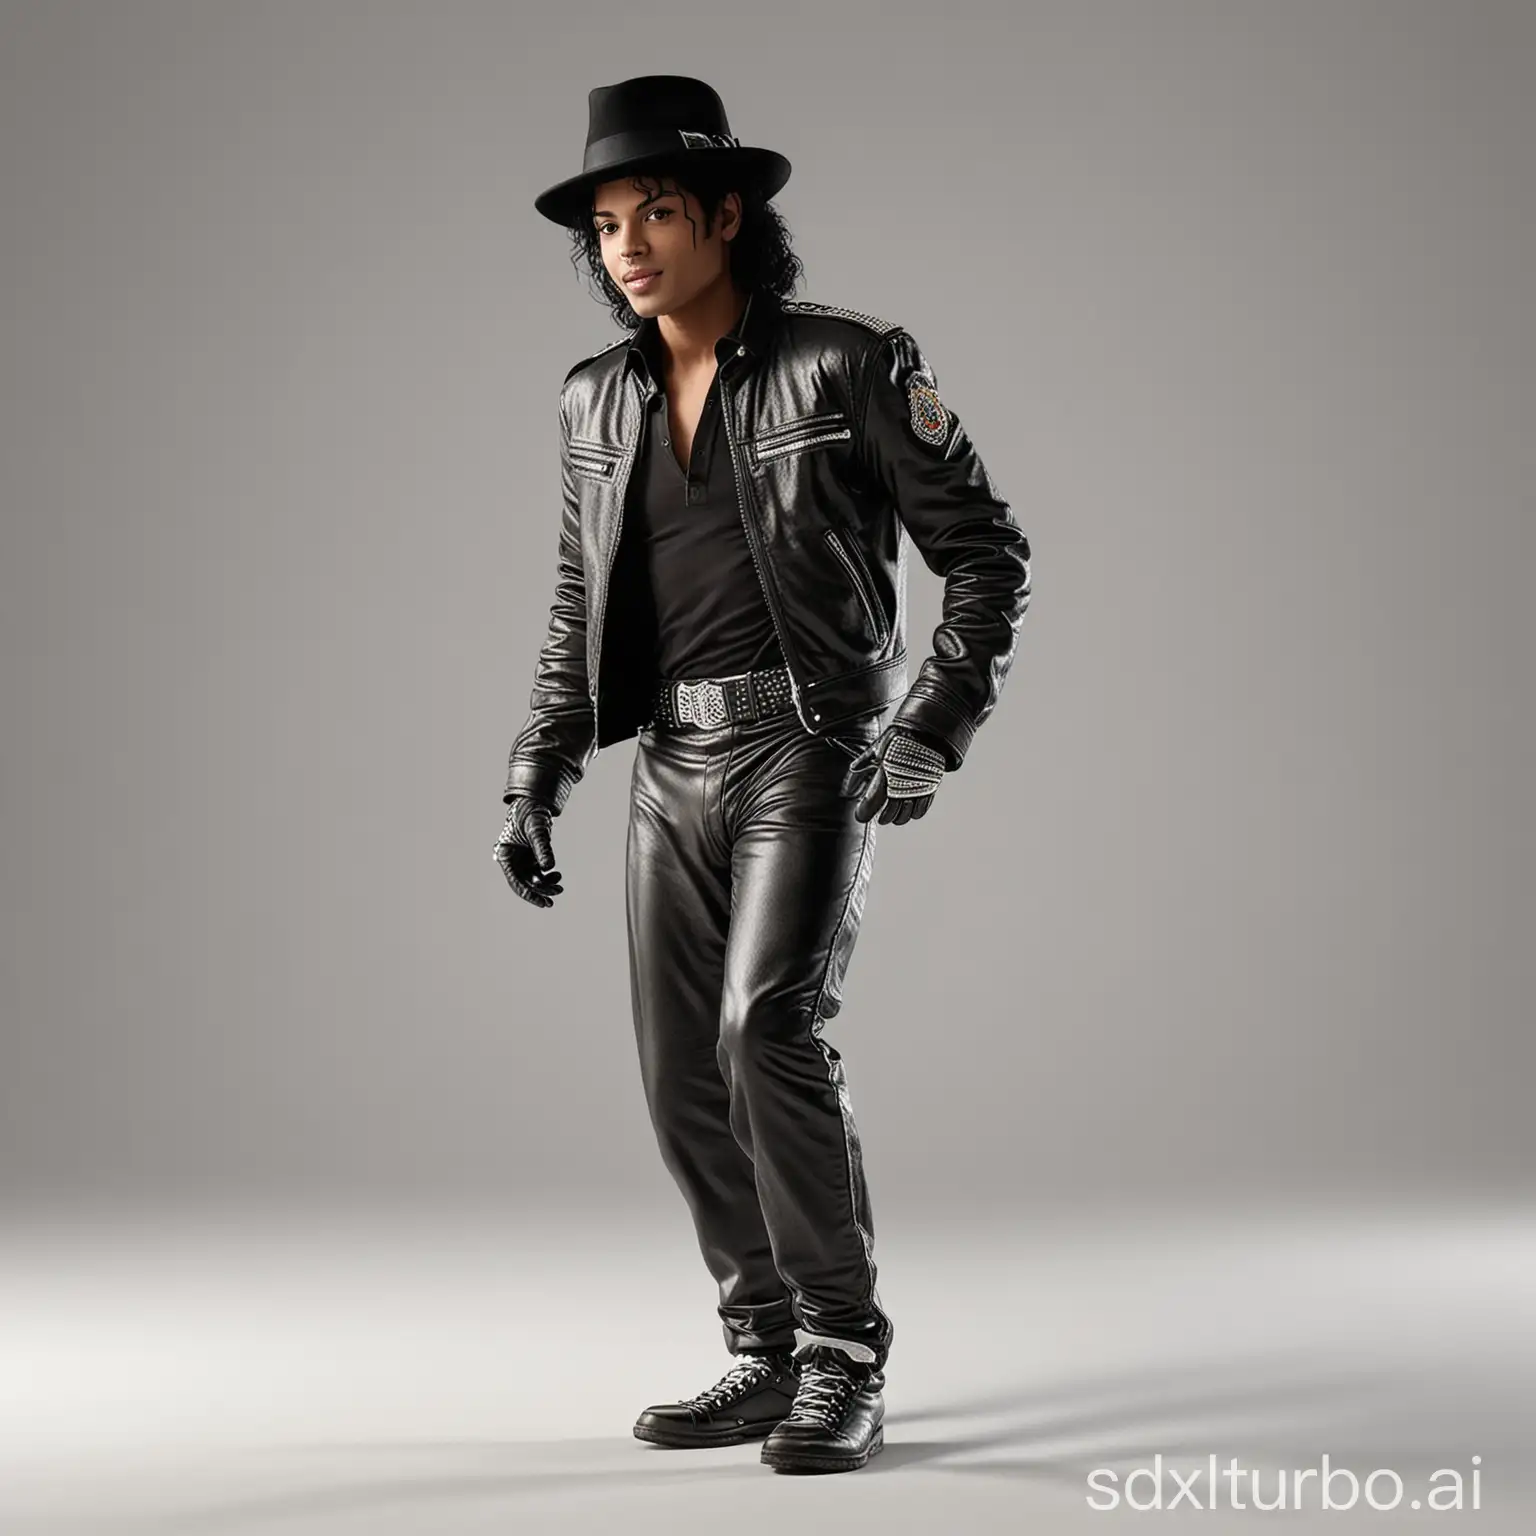 Michael-Jackson-Moonwalk-Iconic-Dance-Move-in-HighResolution-Realism